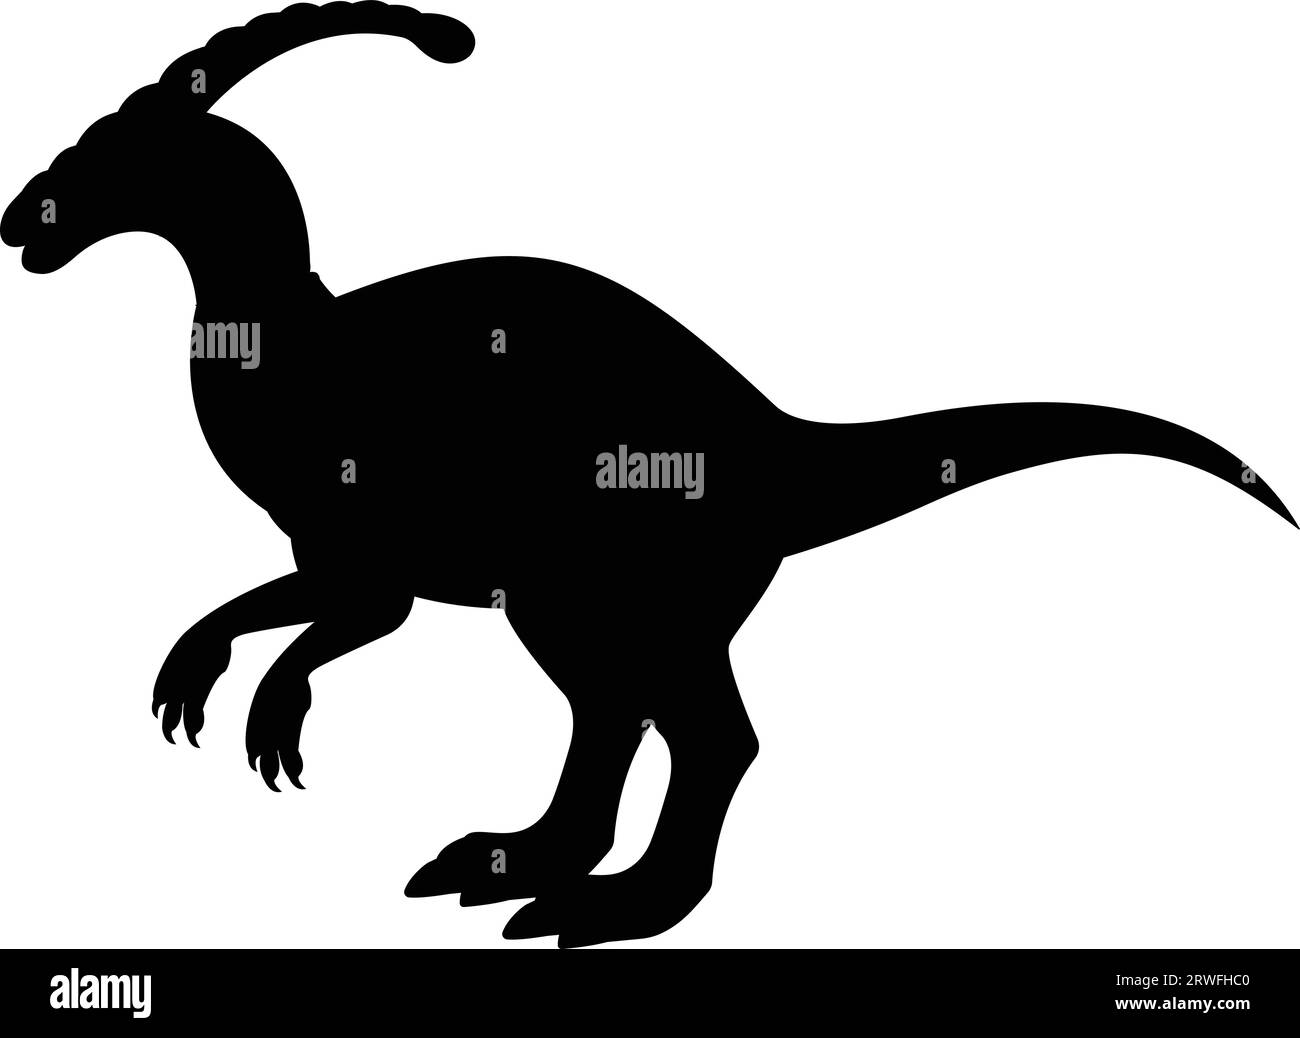 Parasaurolophus Dinosaur Silhouette Vector Isolated on White Background Stock Vector